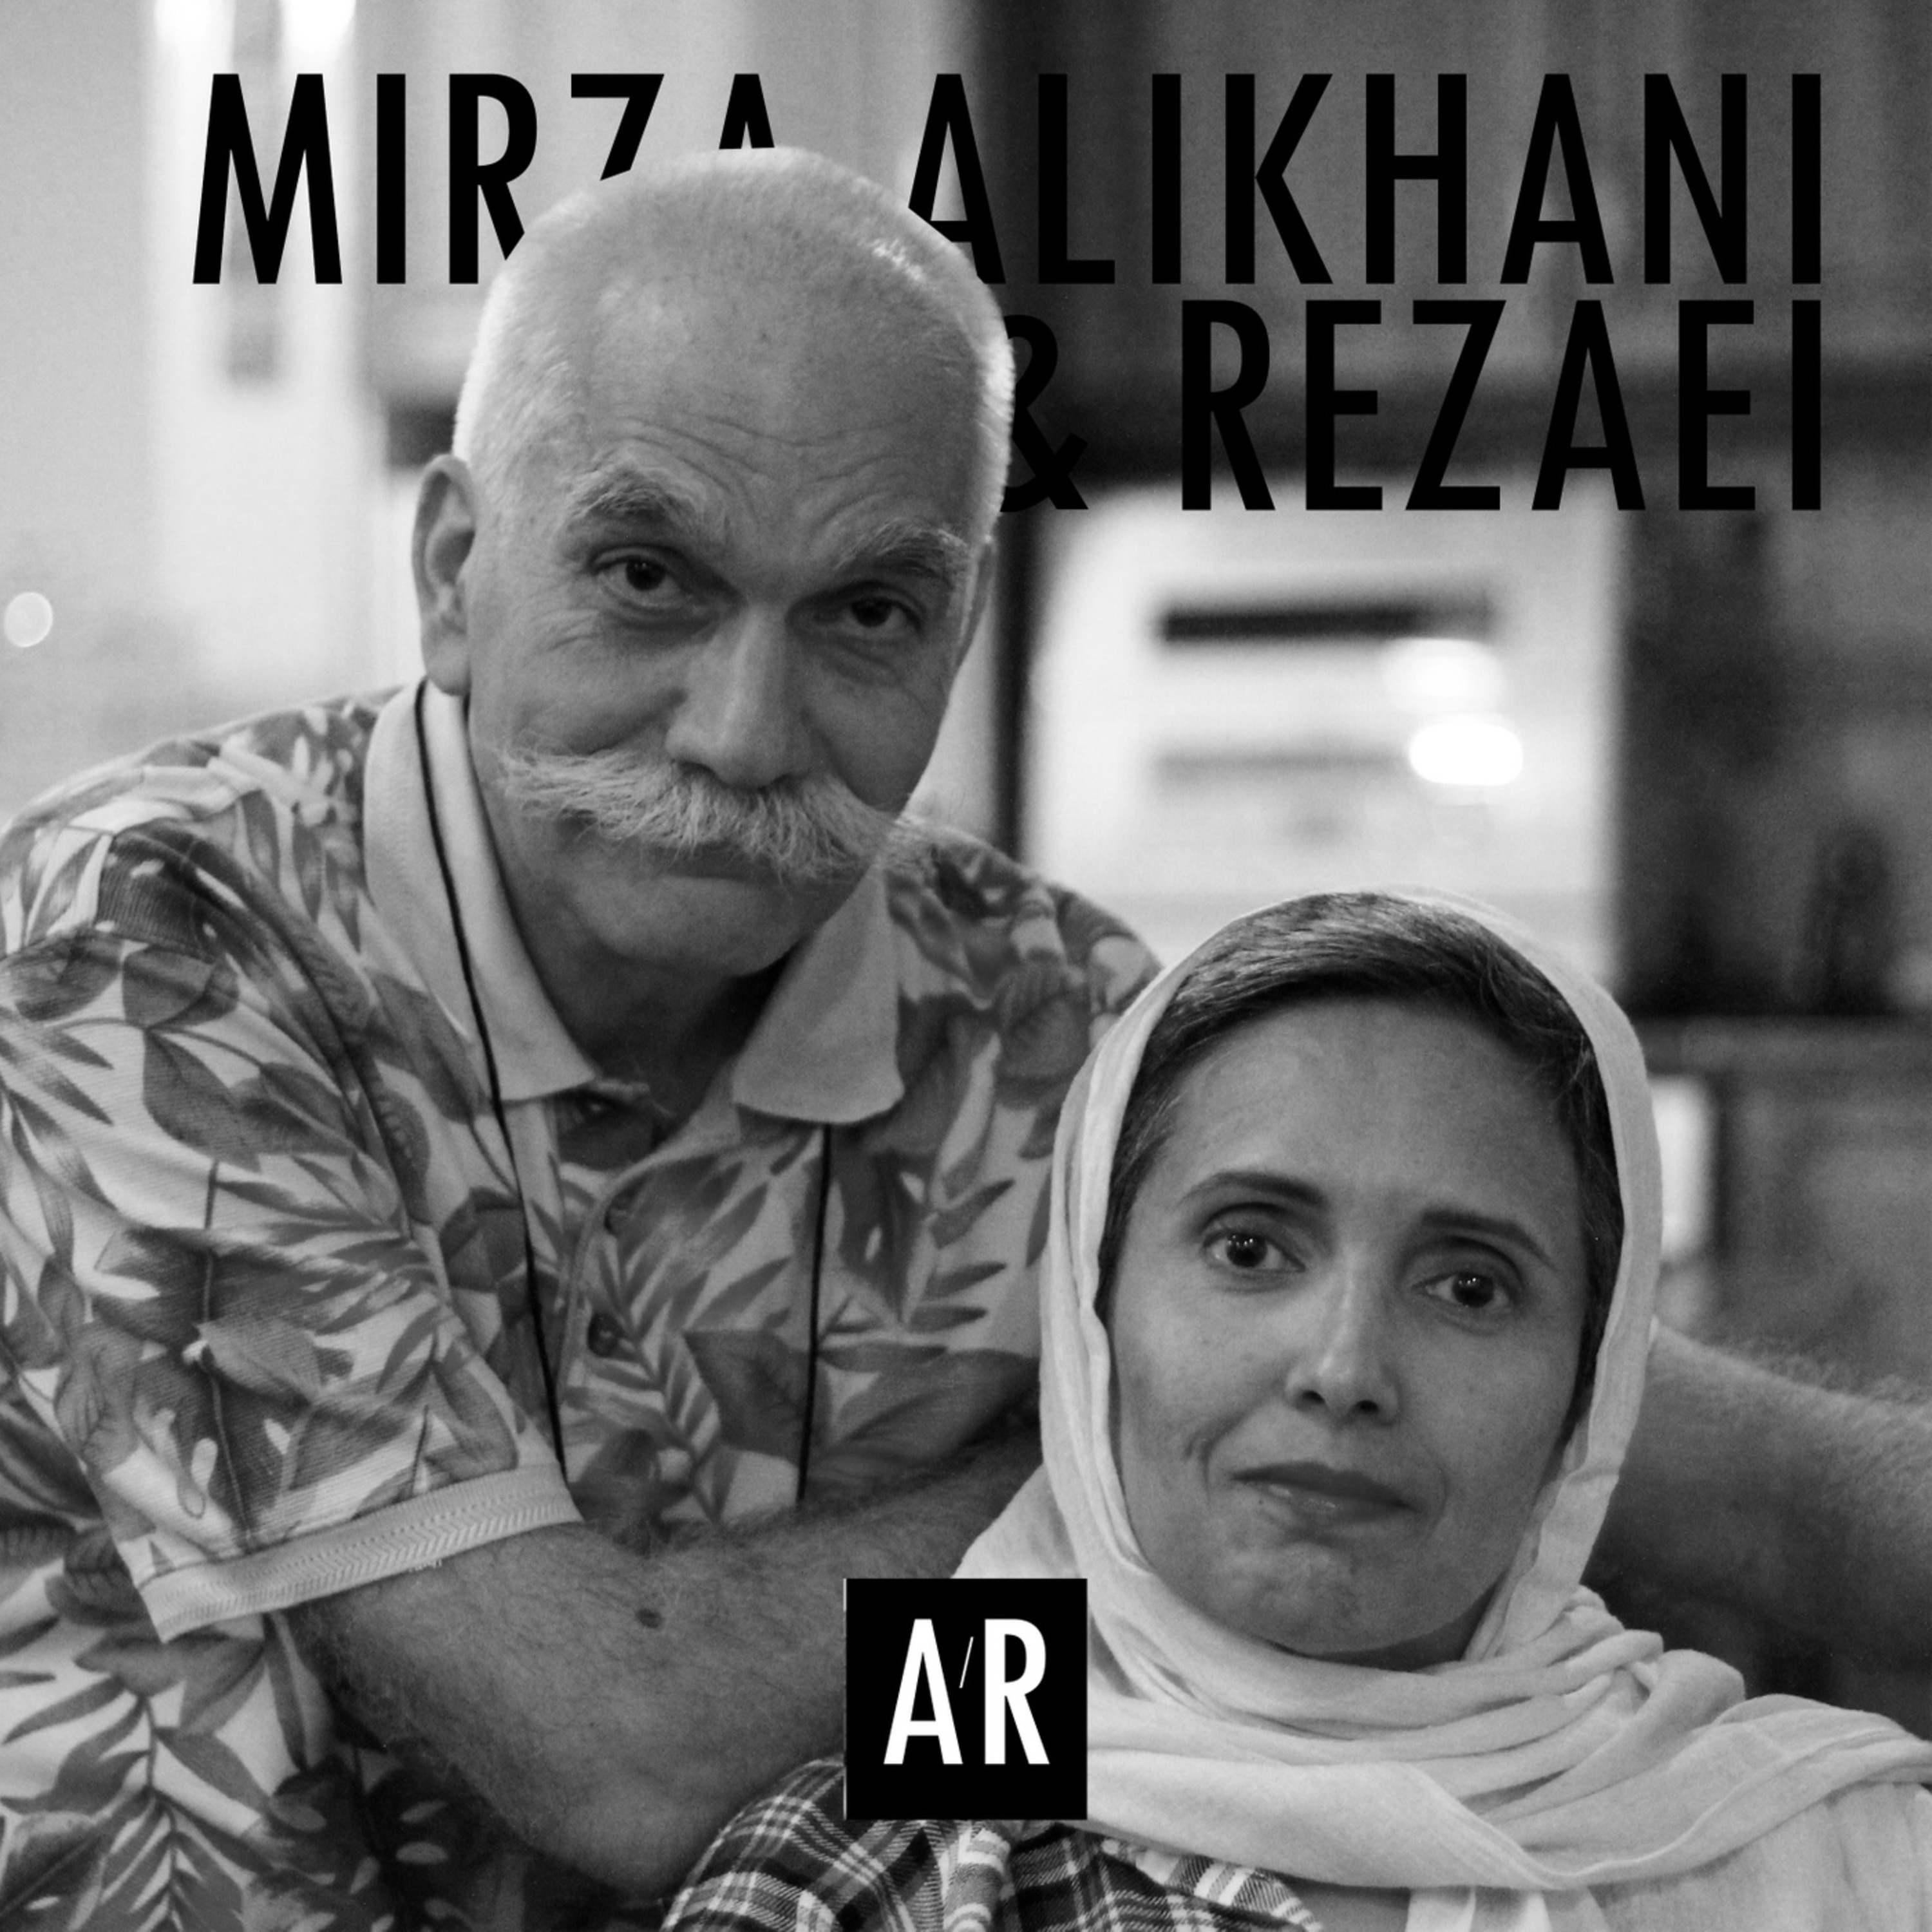 6 - Ladan Rezaei and Iraj Mirza Alikhani